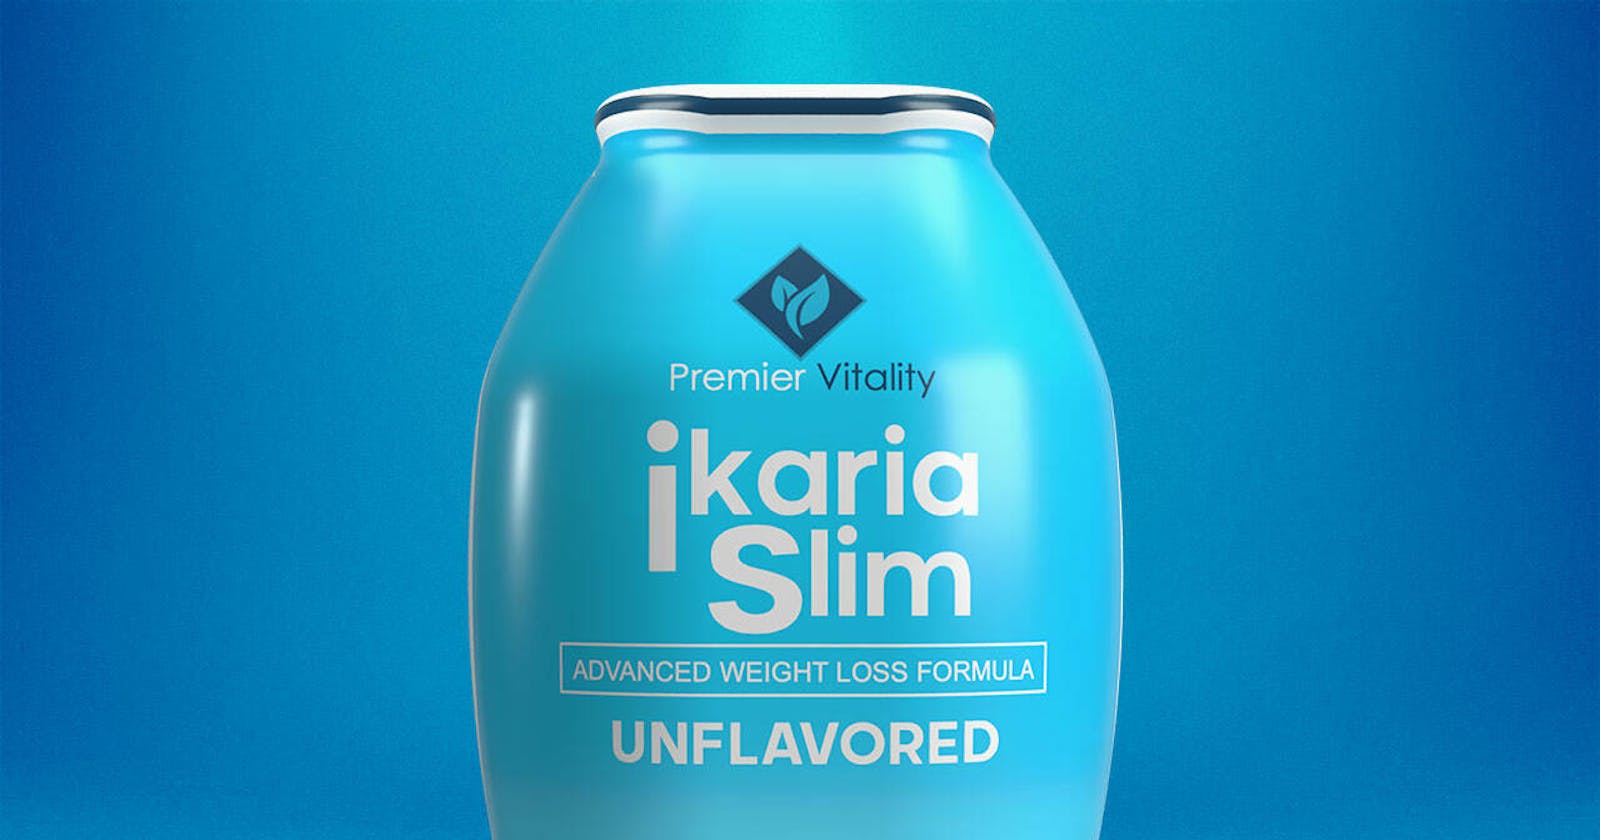 Ikaria Slim: Premier Vitality Ikaria Slim Weight loss